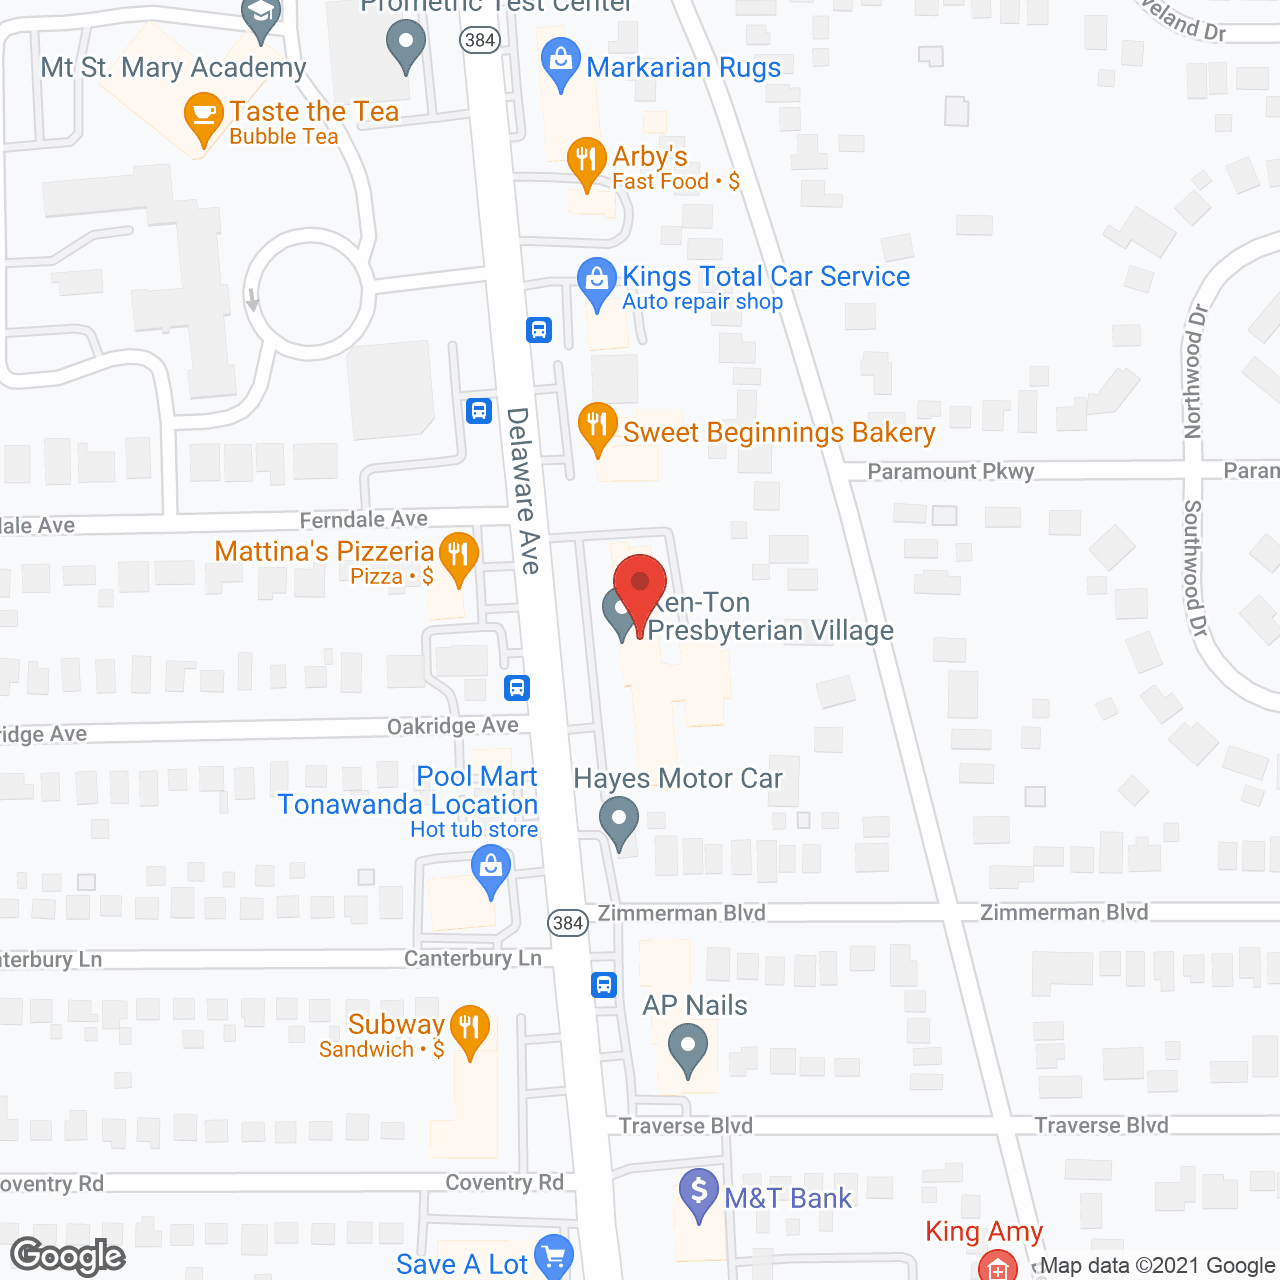 Ken-Ton Presbyterian Village in google map